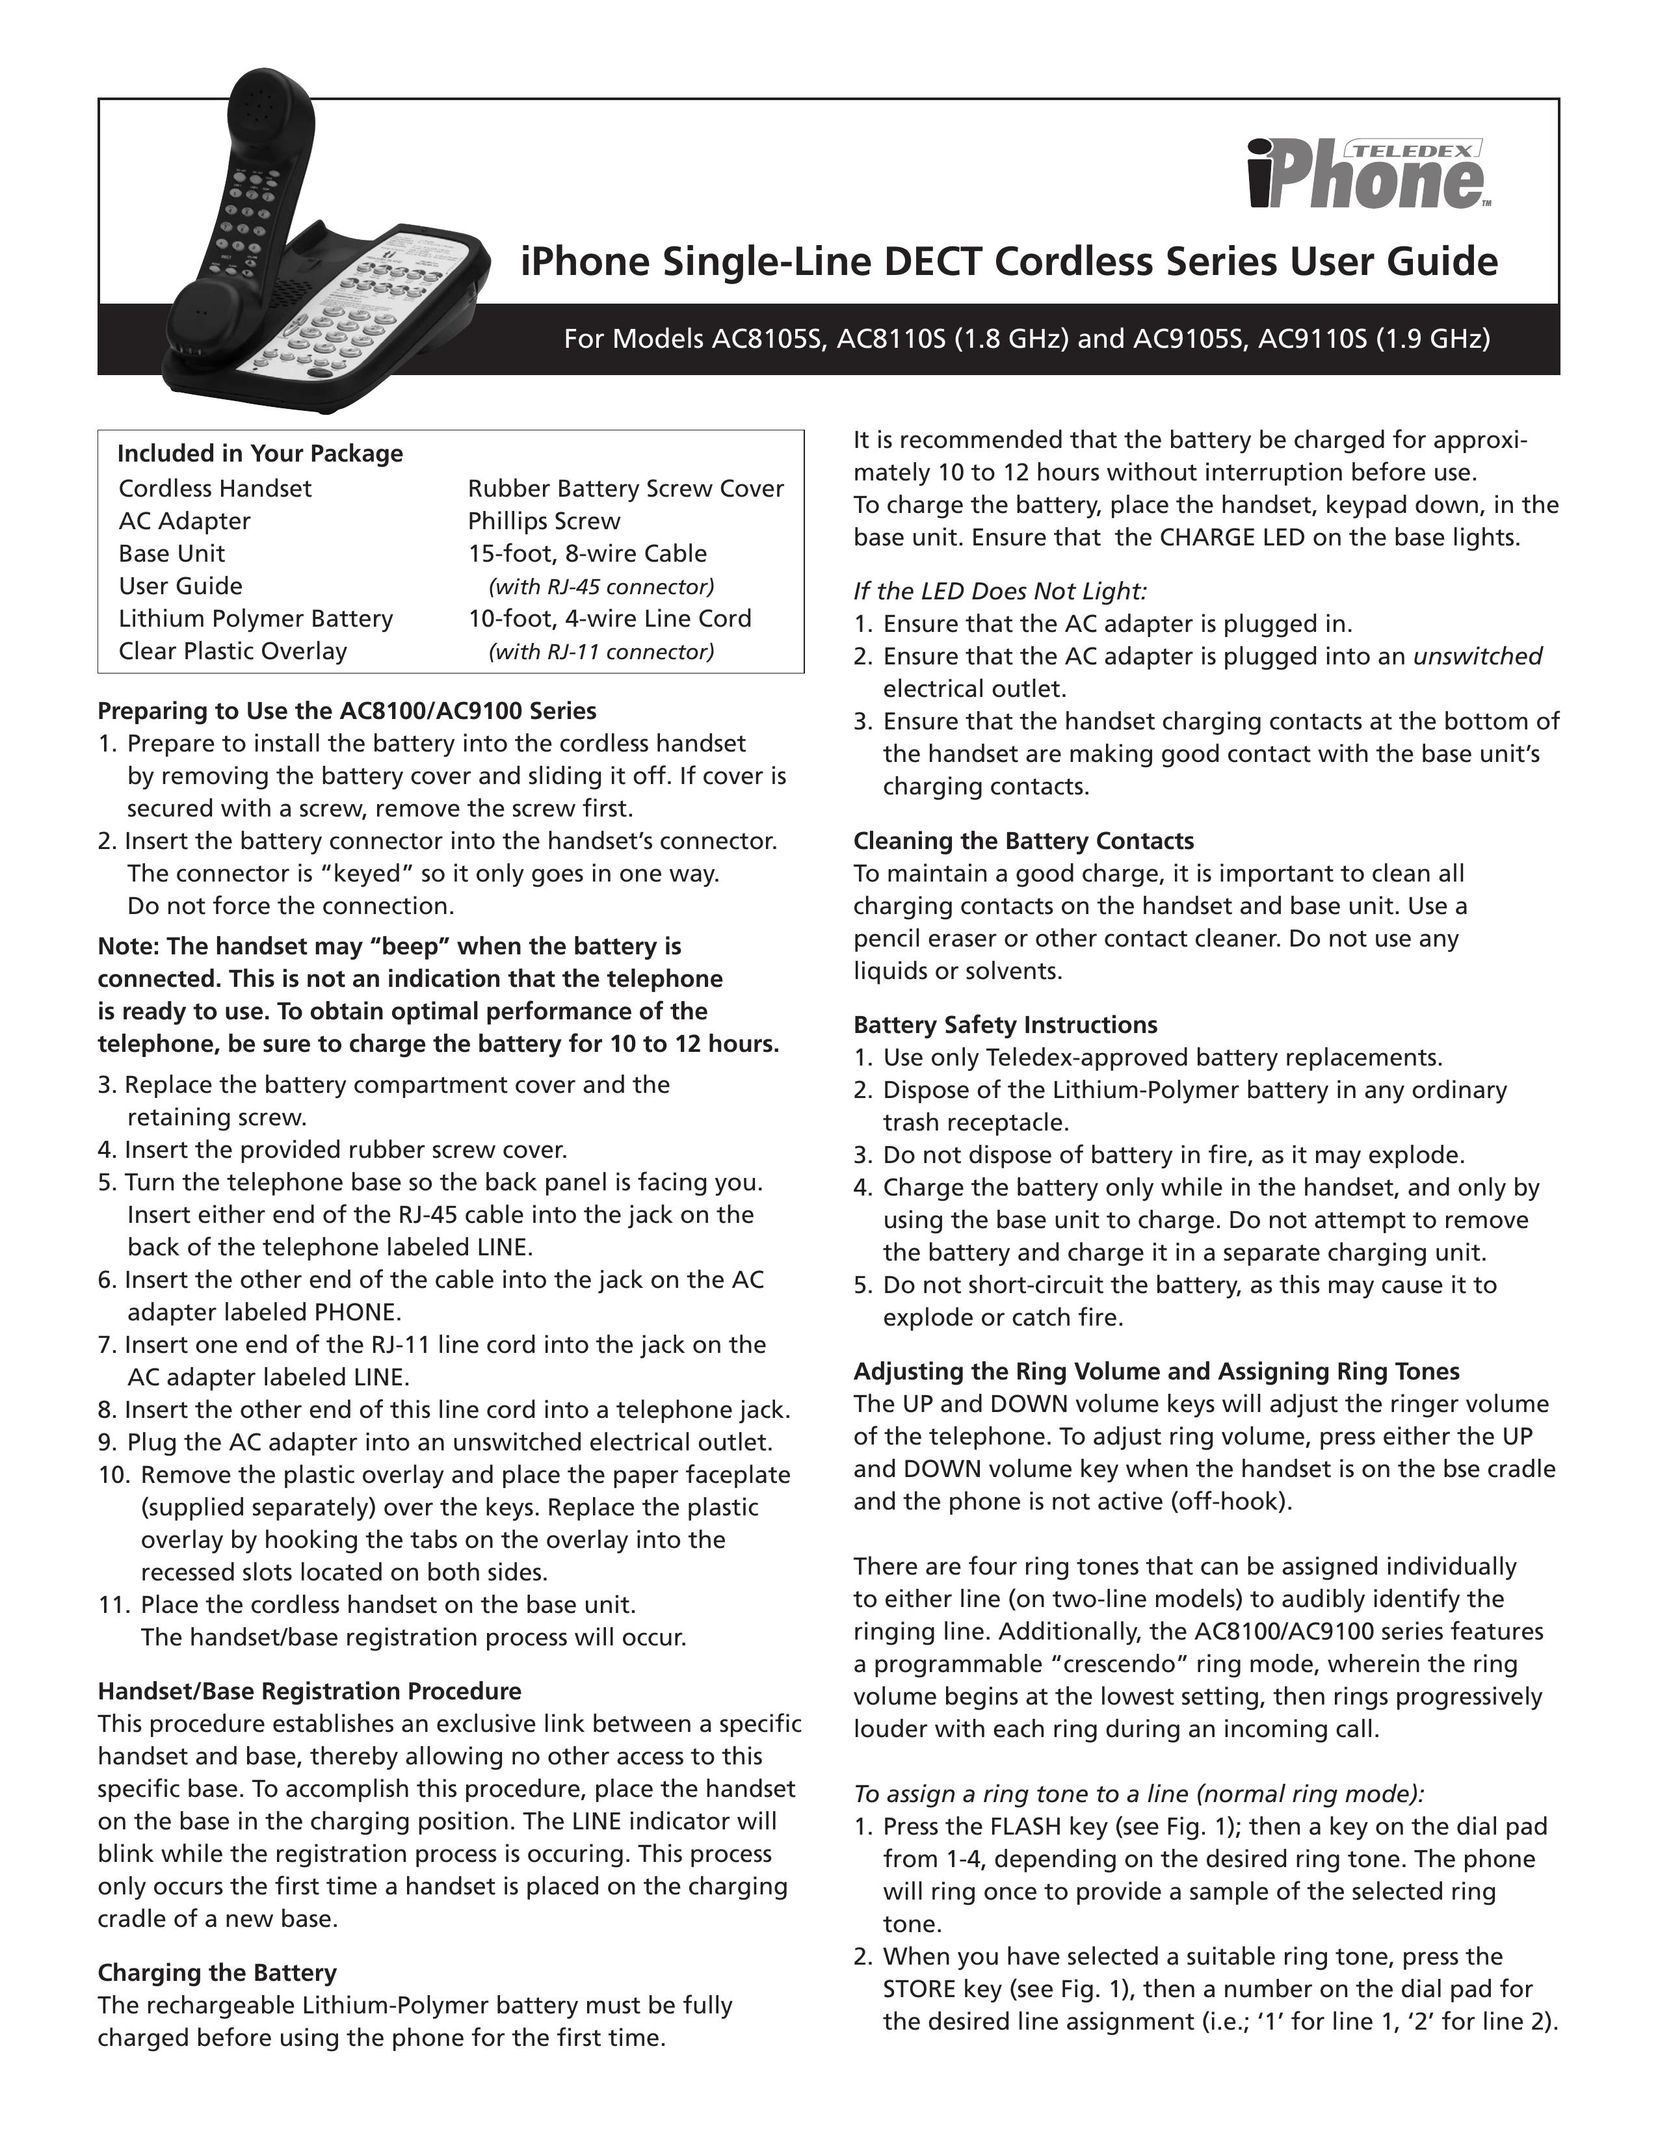 Teledex AC9105S Cordless Telephone User Manual